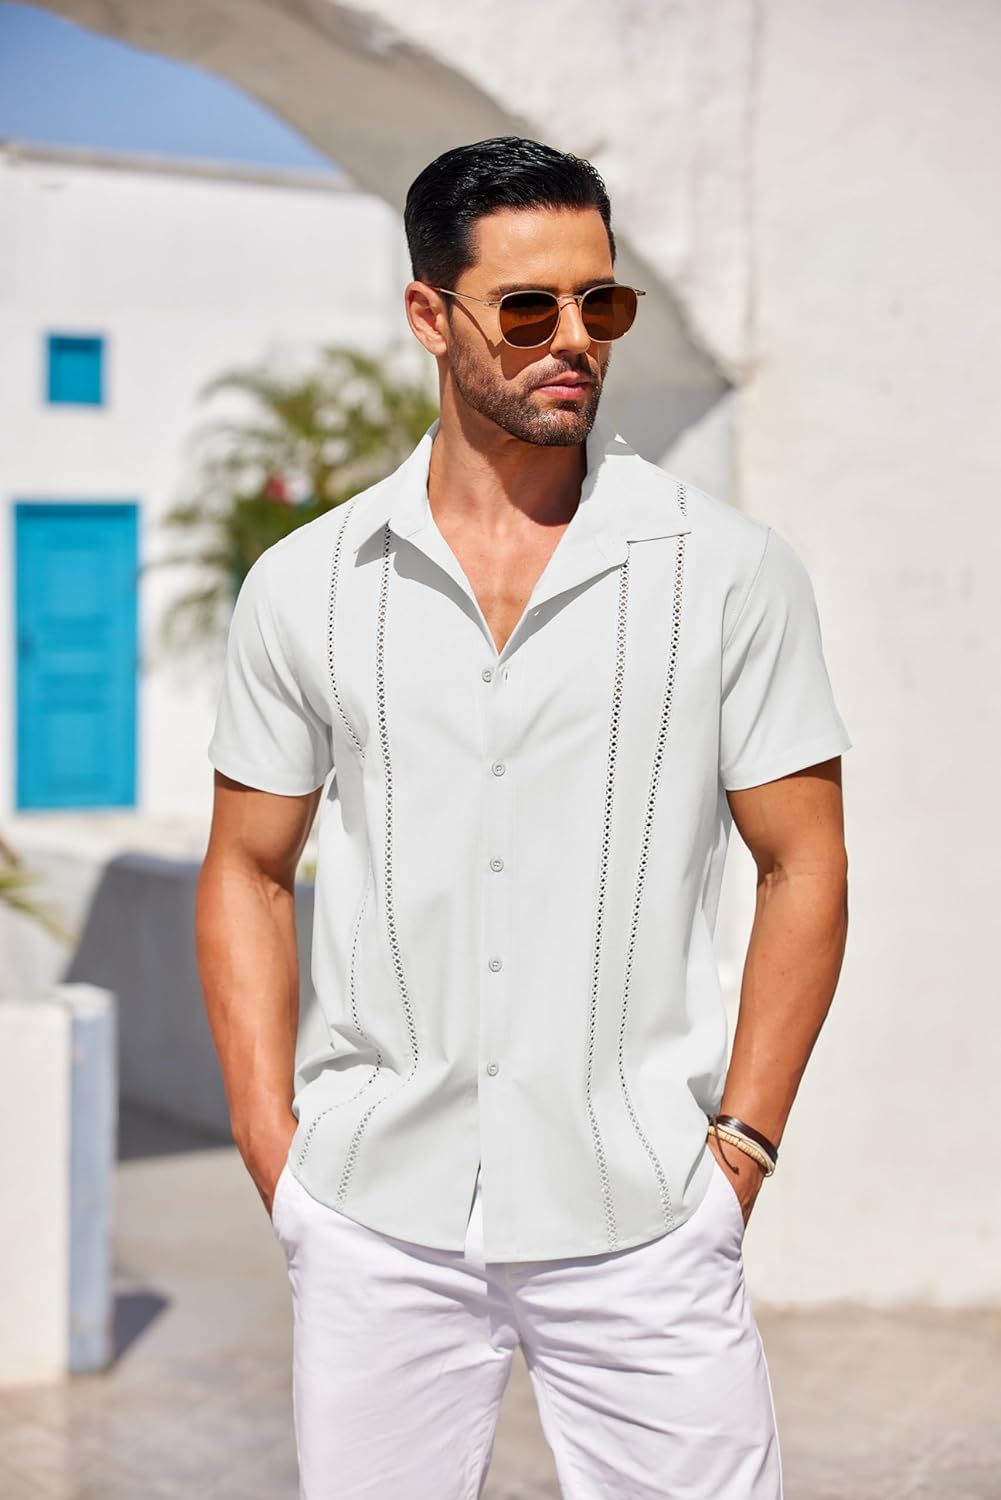 Sophisticated COOFANDY Men's Linen Cuban Beach Shirt with Short Sleeves